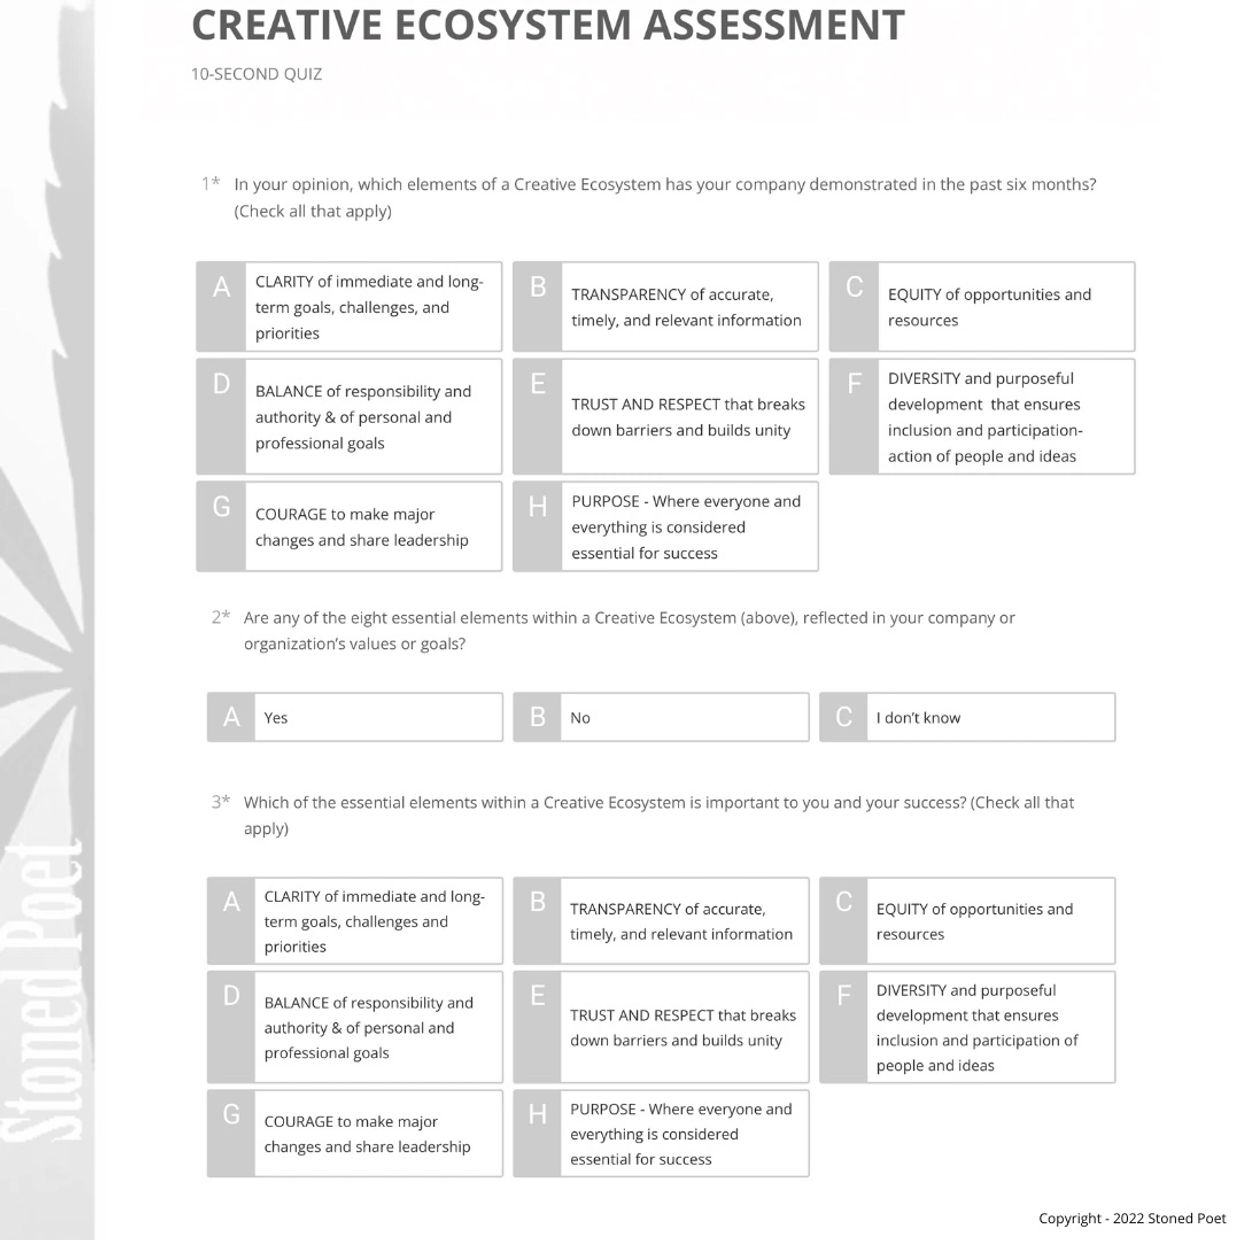 Creative Ecosystem Assessment Tool